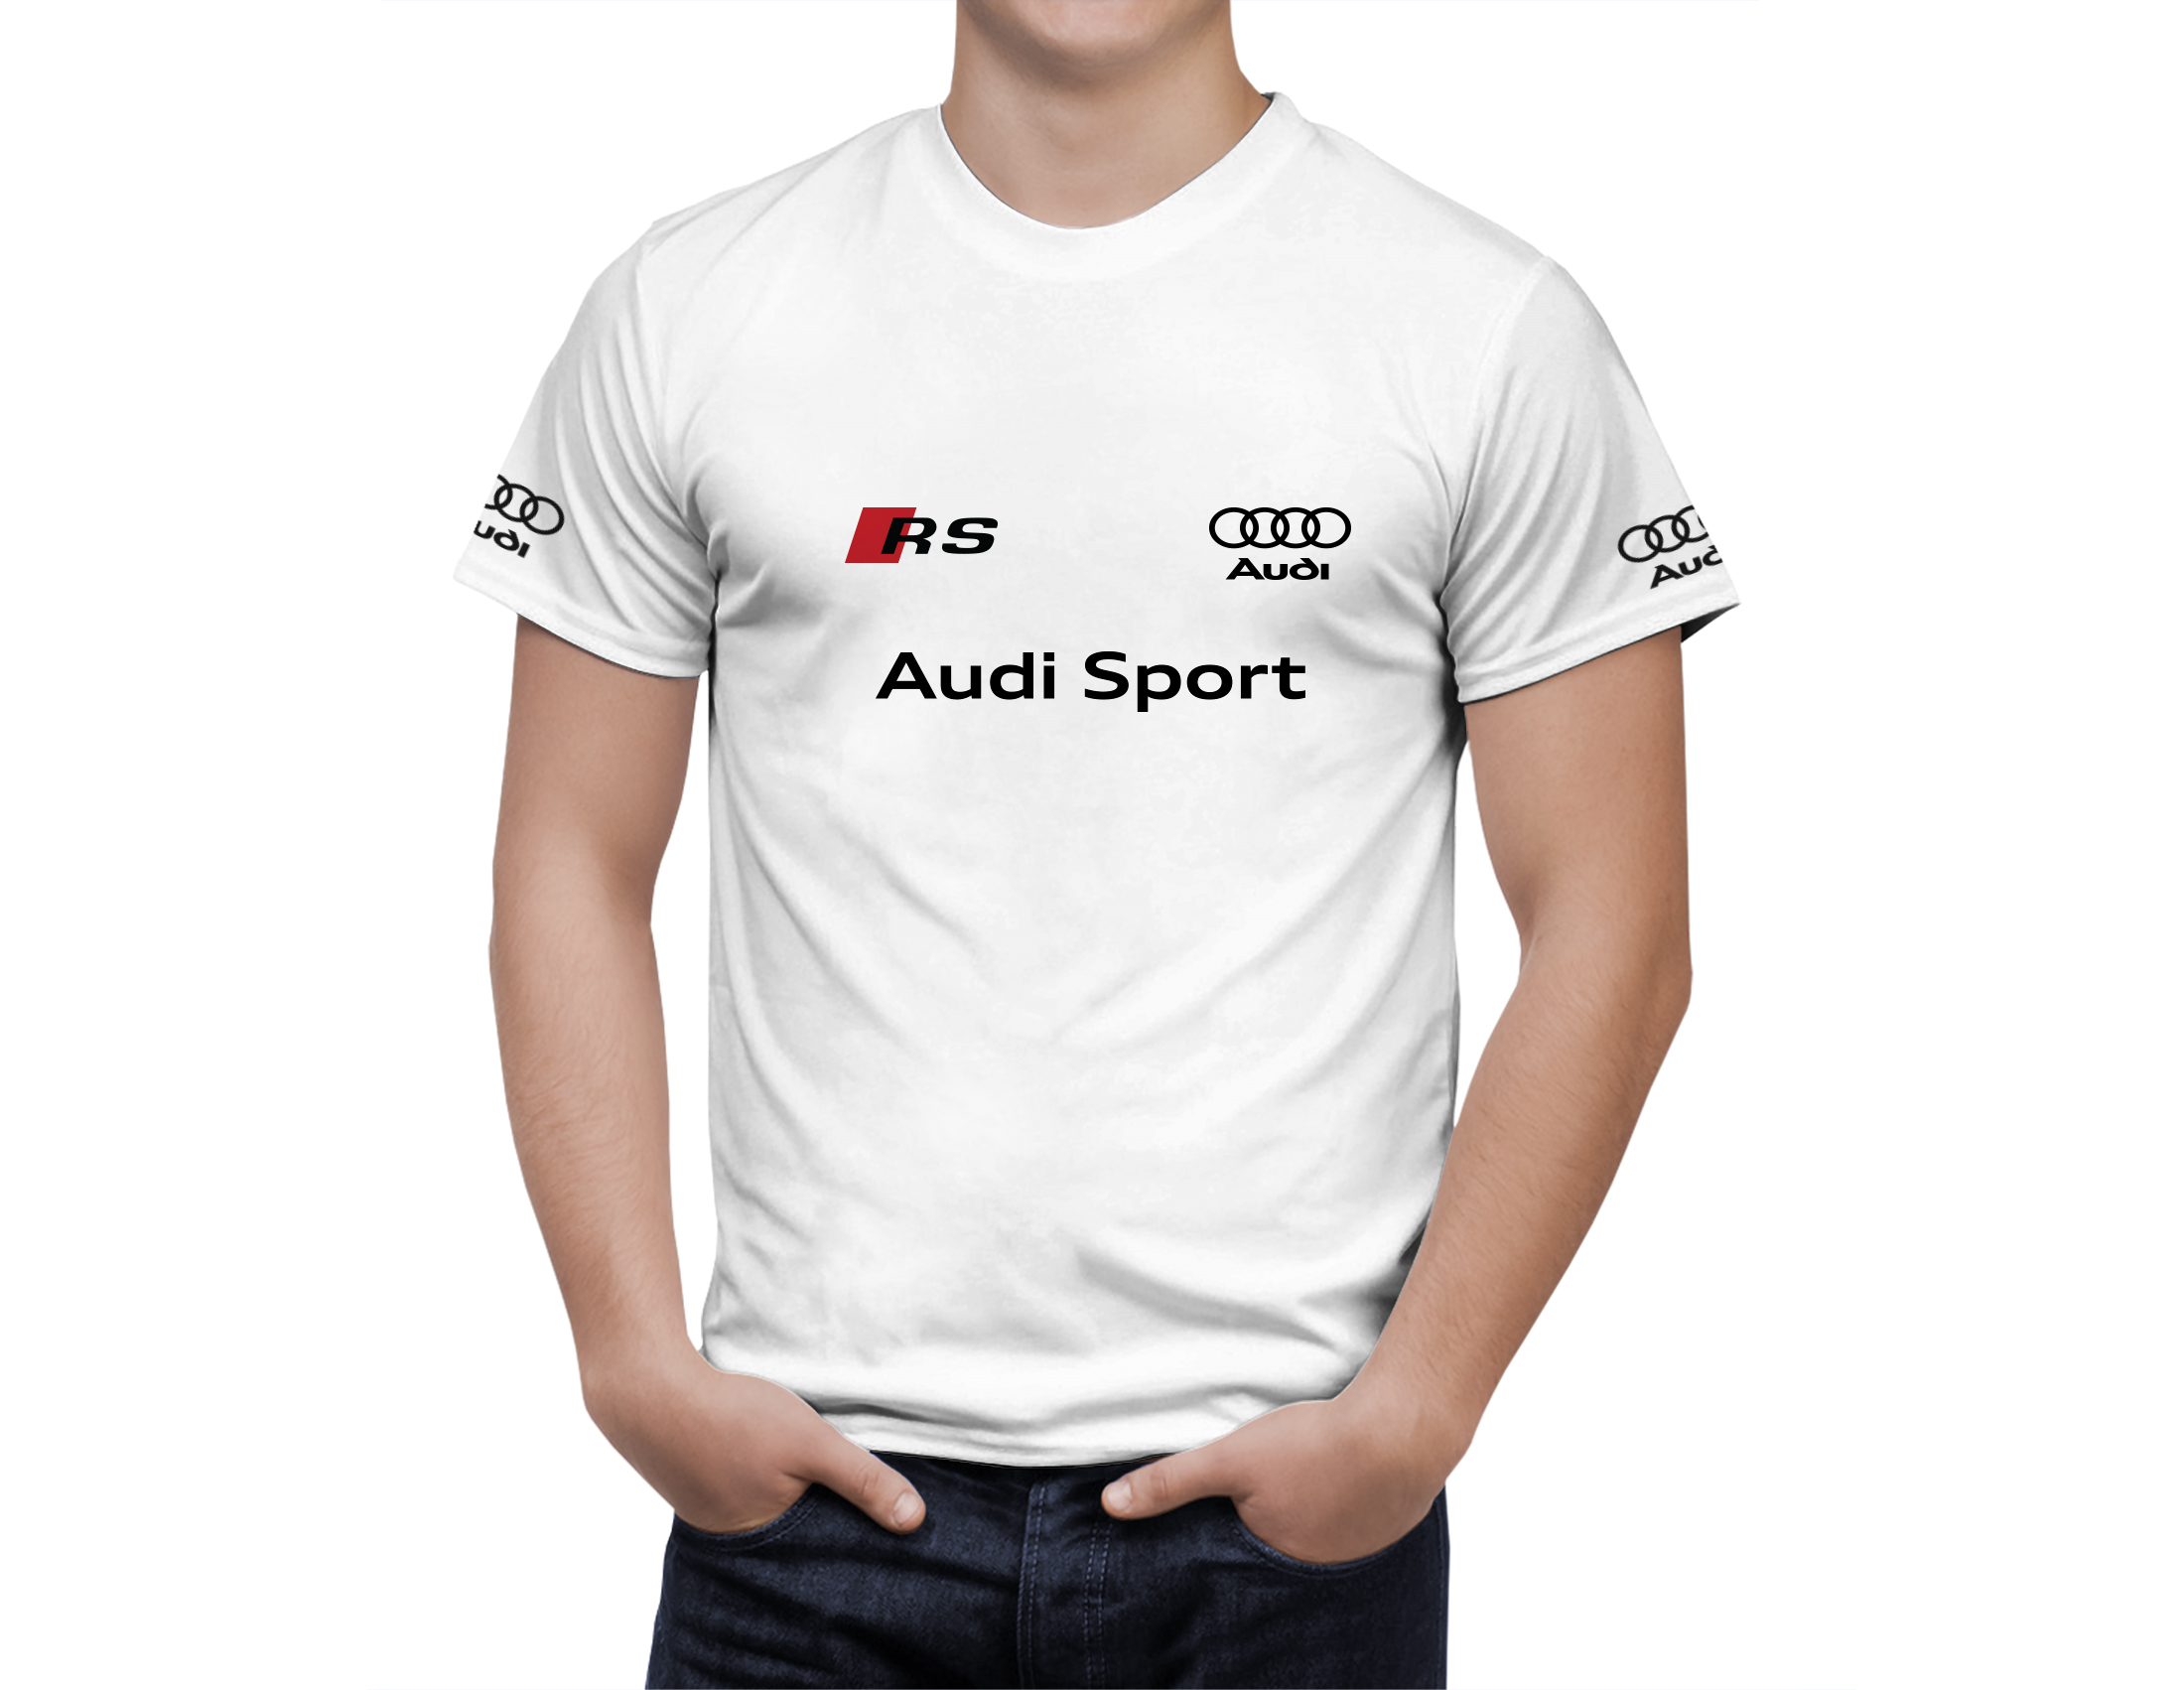 Audi Sport T-Shirt | Best | Teesntowels.com